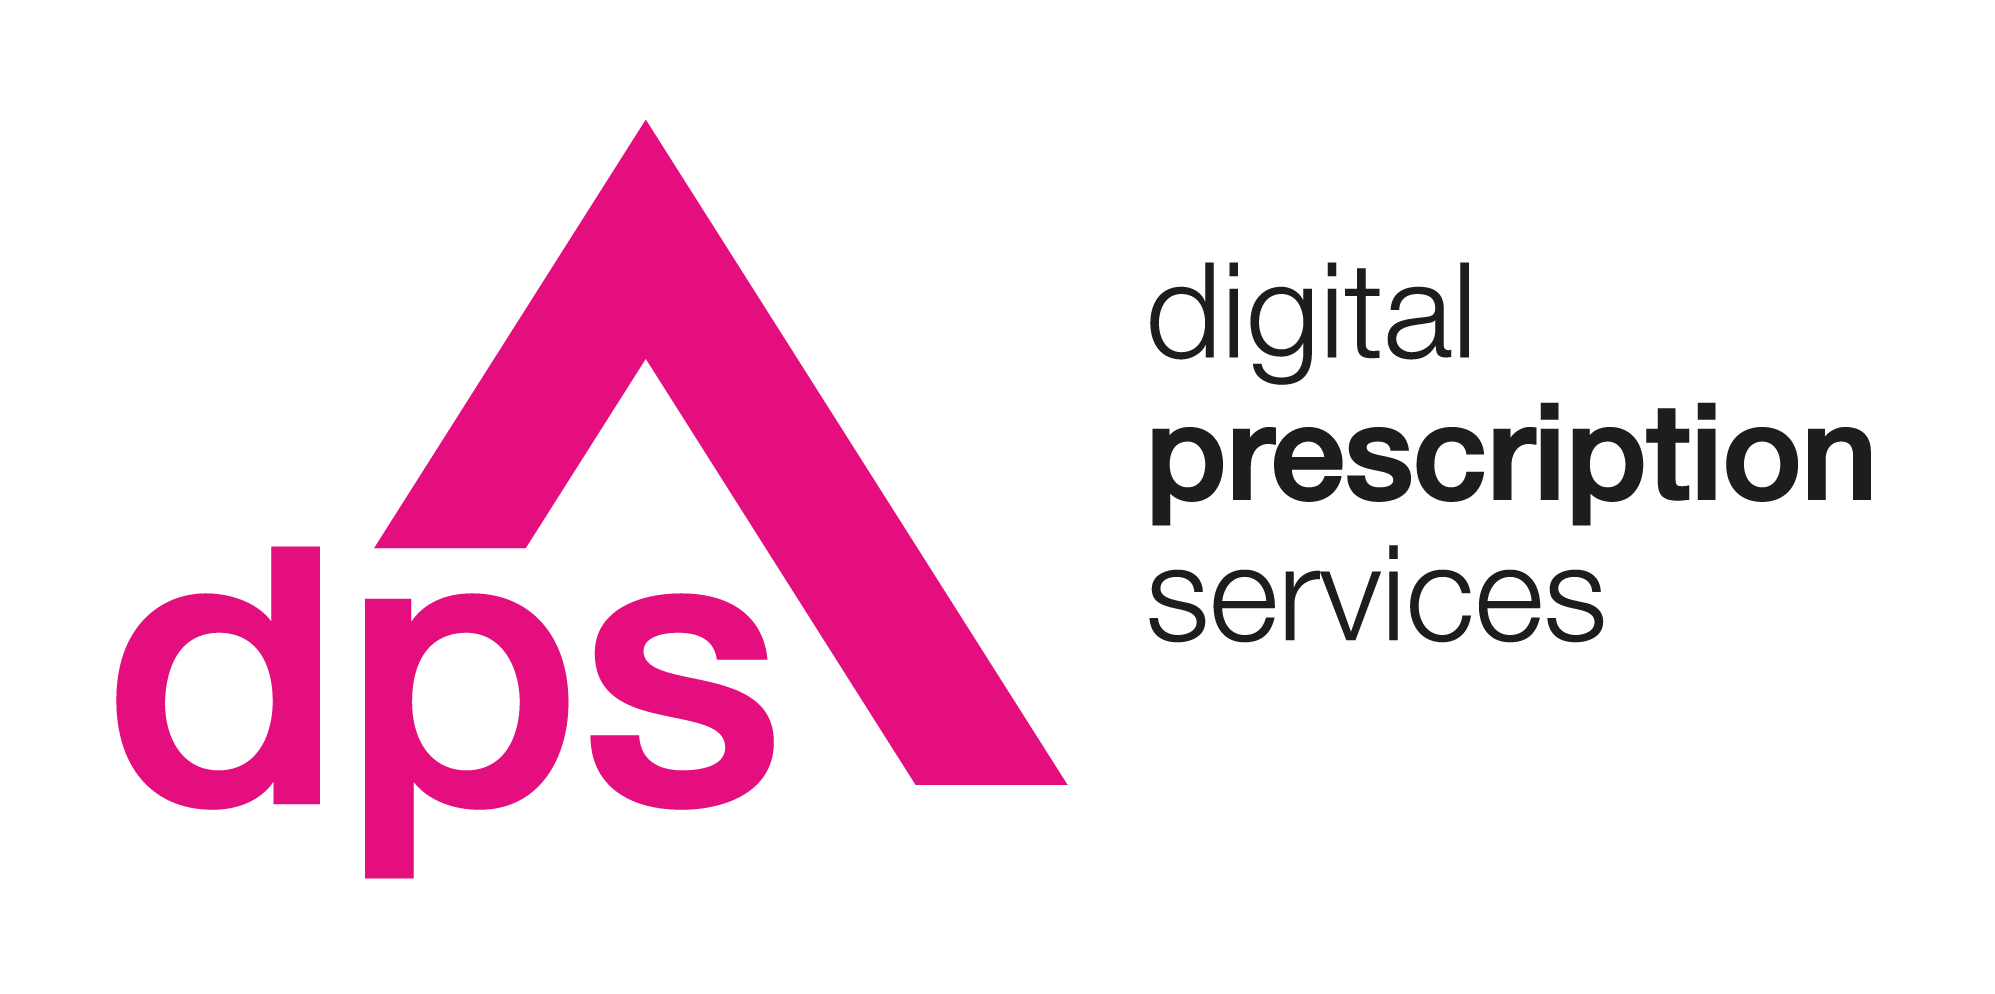 Digital Prescription Services